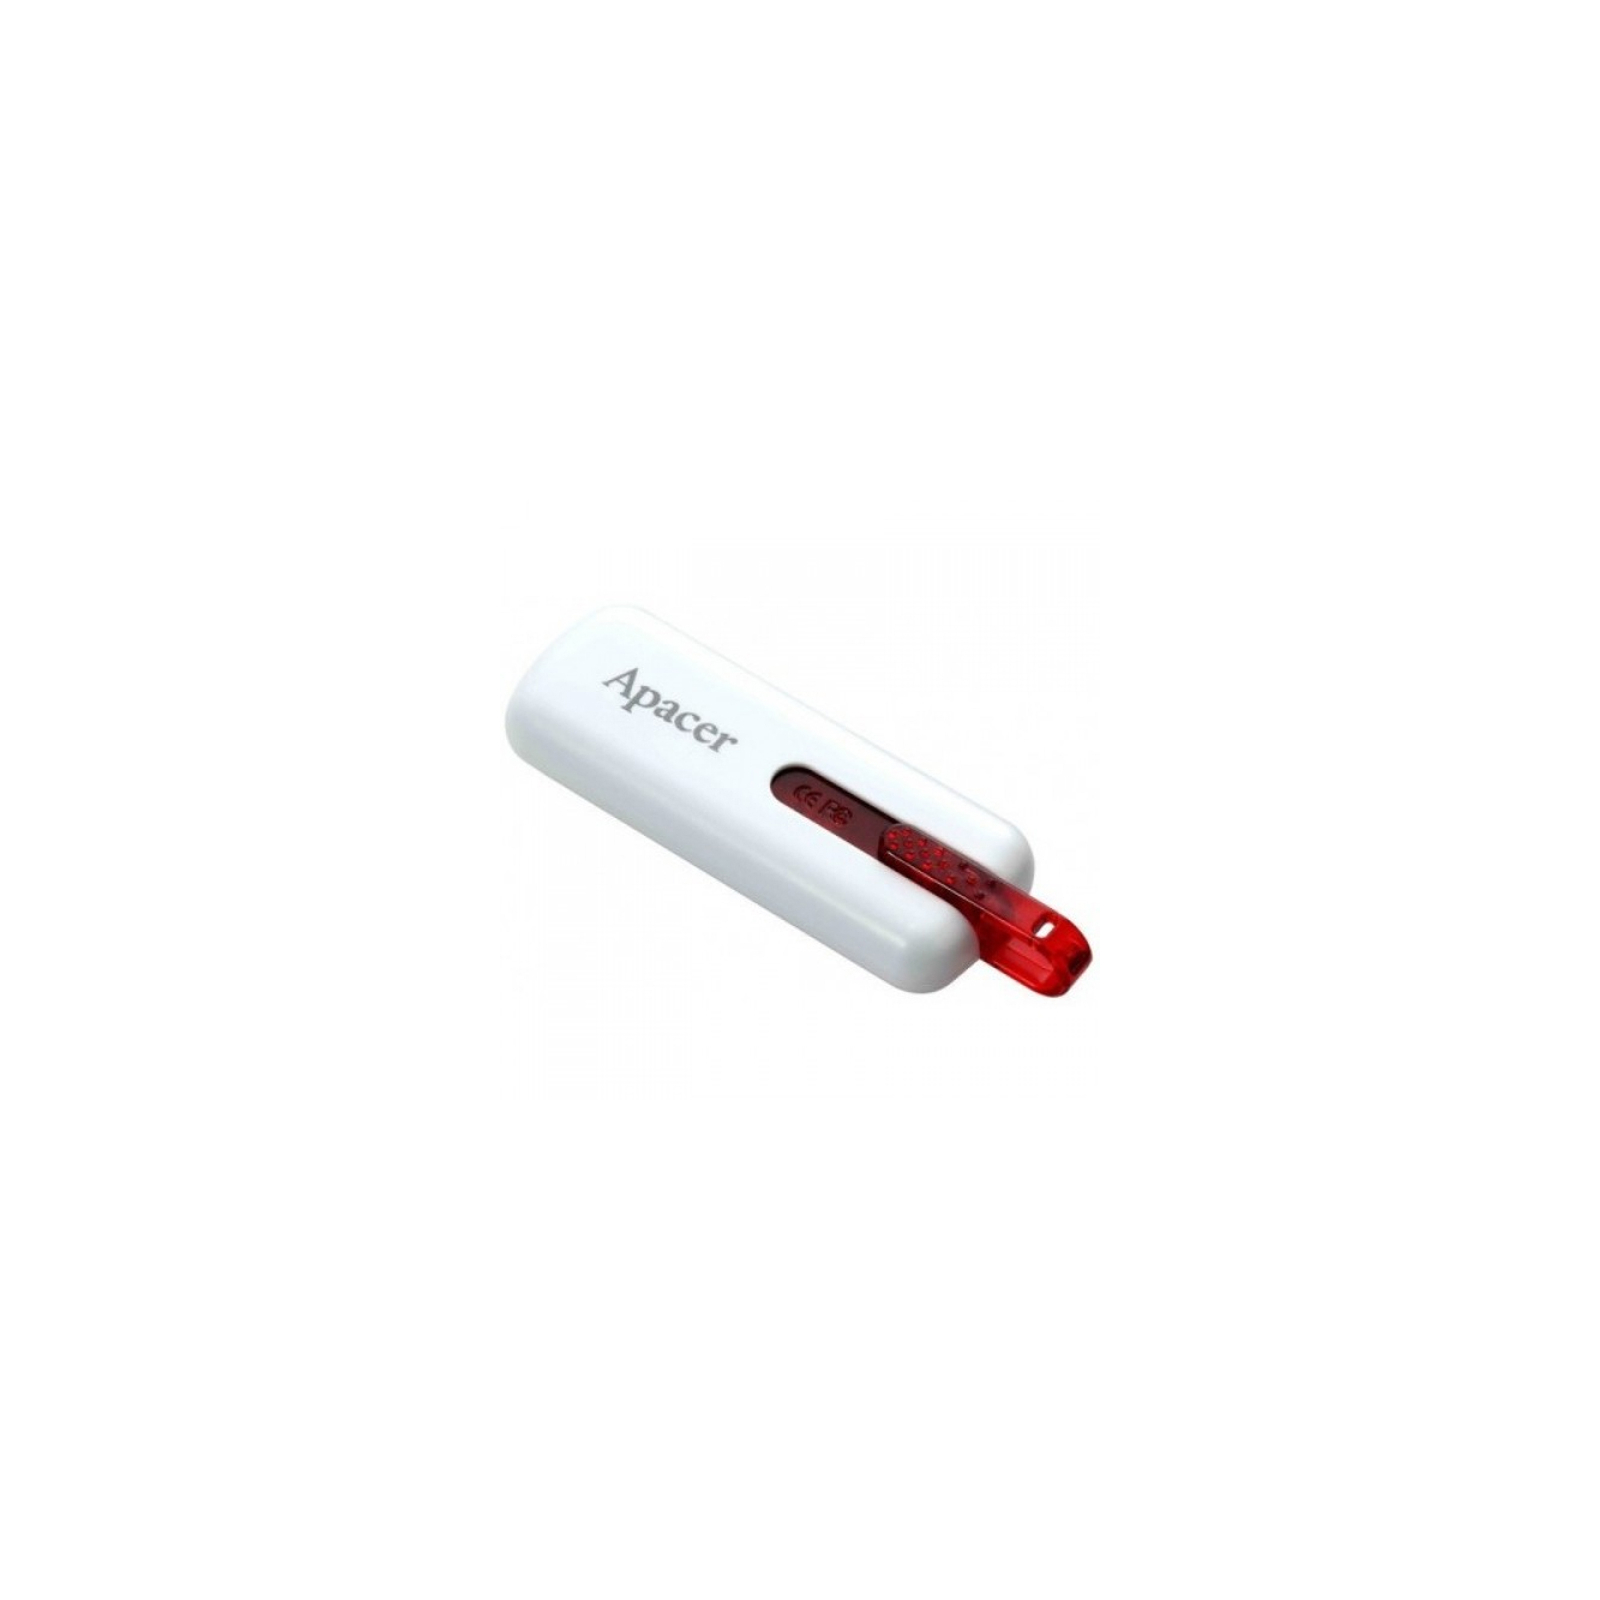 USB флеш накопитель Apacer 16GB AH326 white USB 2.0 (AP16GAH326W-1) изображение 8